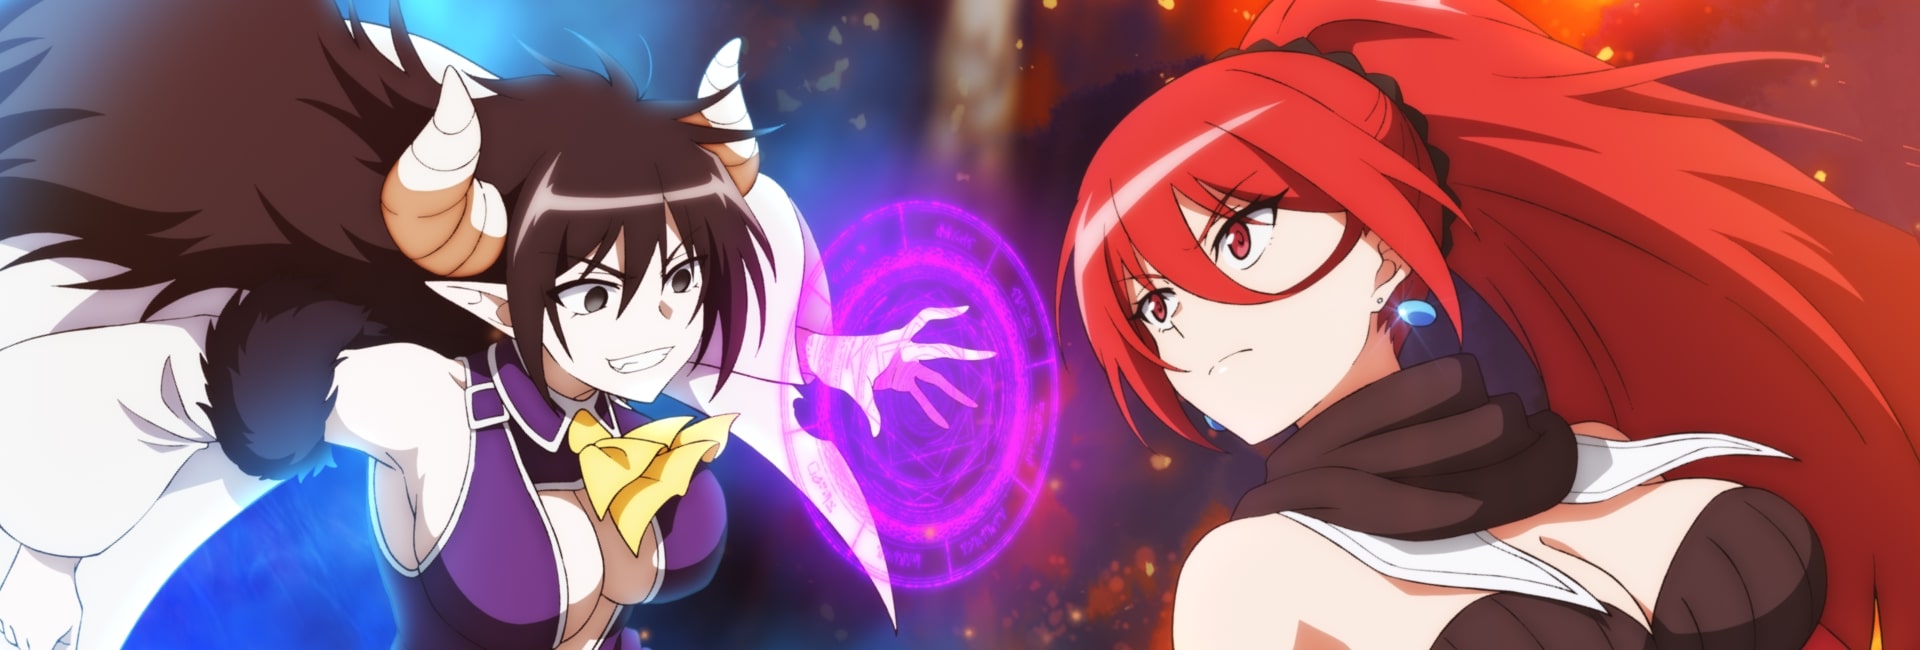 Isekai One Turn Kill Neesan: Ane Douhan no Isekai Seikatsu Hajimemashita  Online - Assistir anime completo dublado e legendado